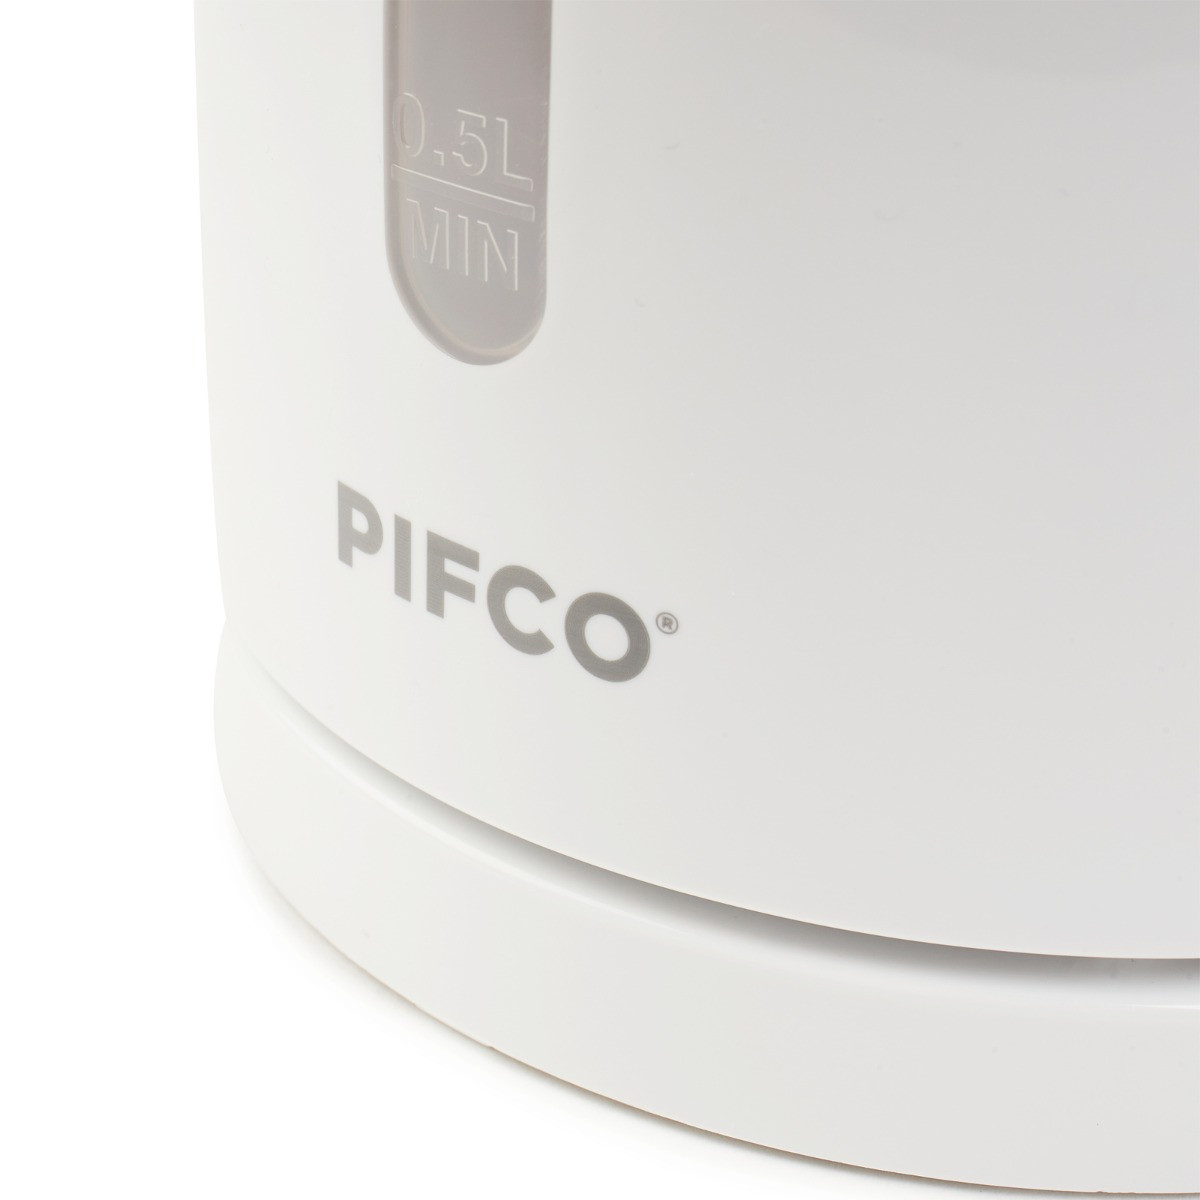 PIFCO Essentials Kettle, 1.7L - White>